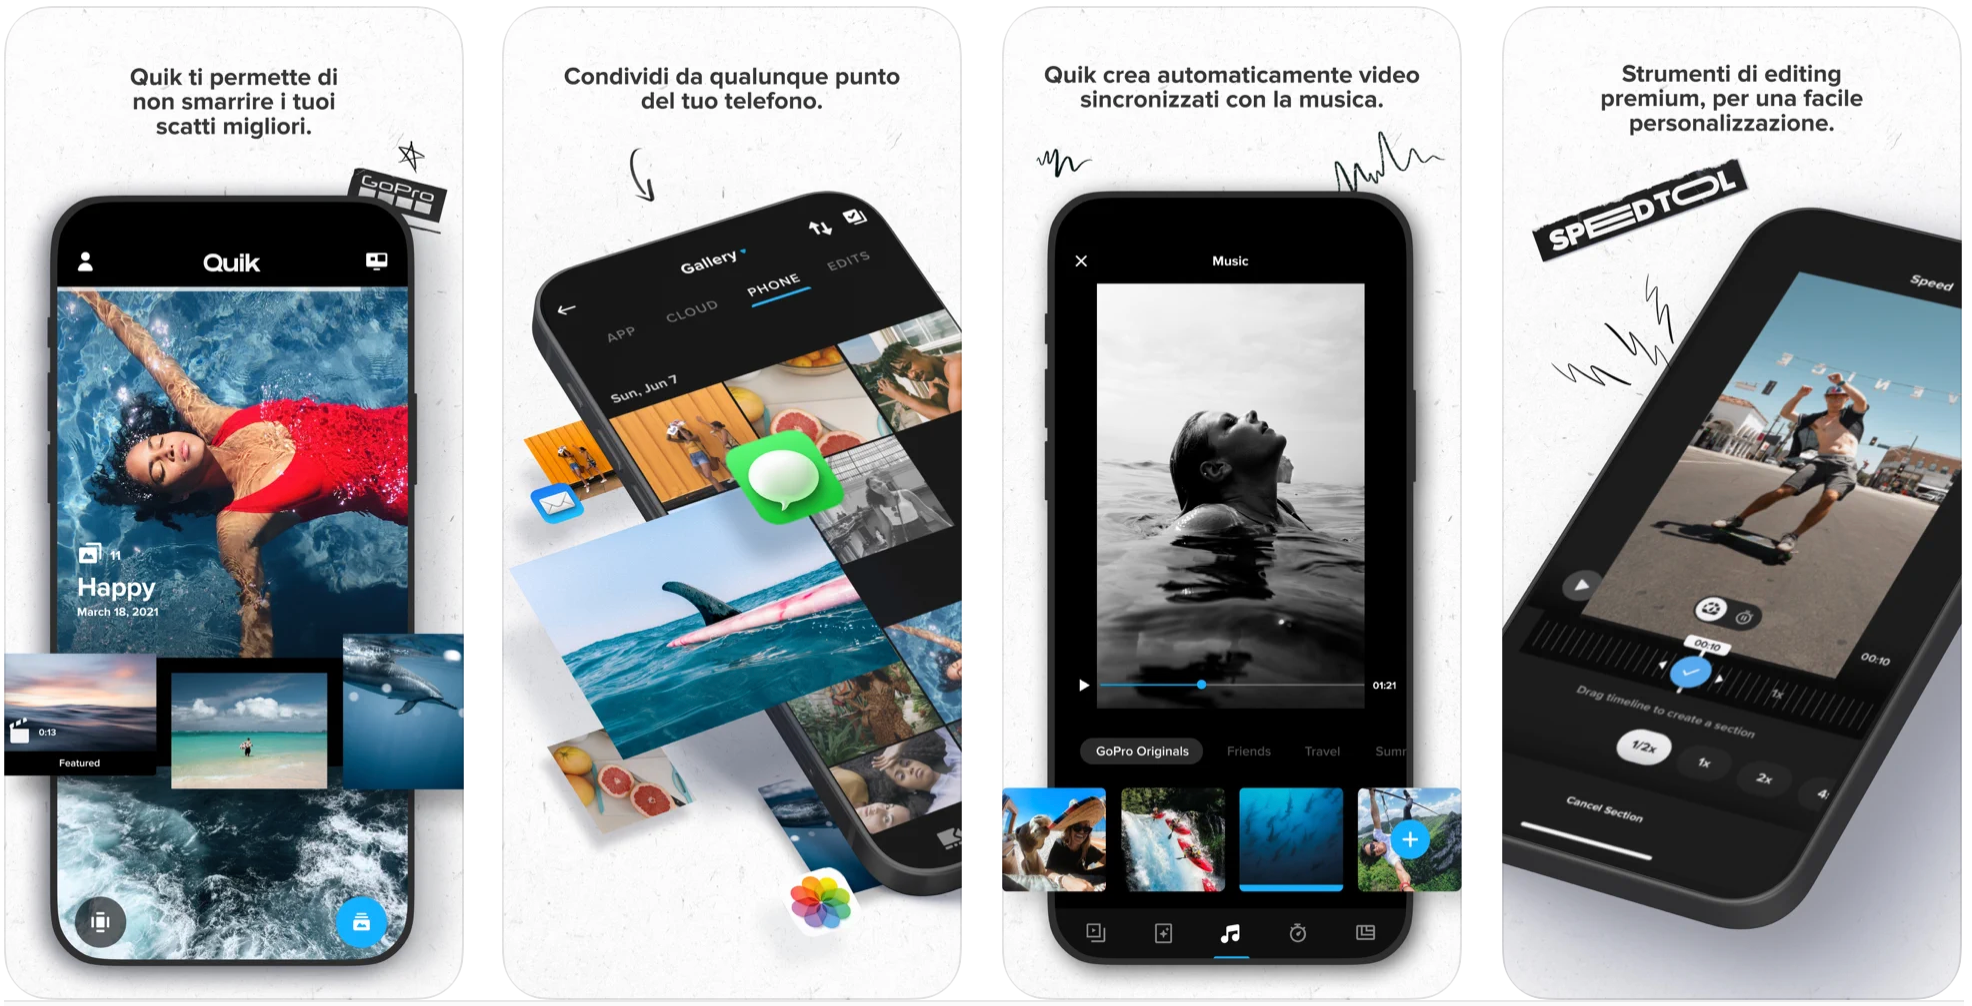 Migliori app Instagram per creare video - GoPro Quick